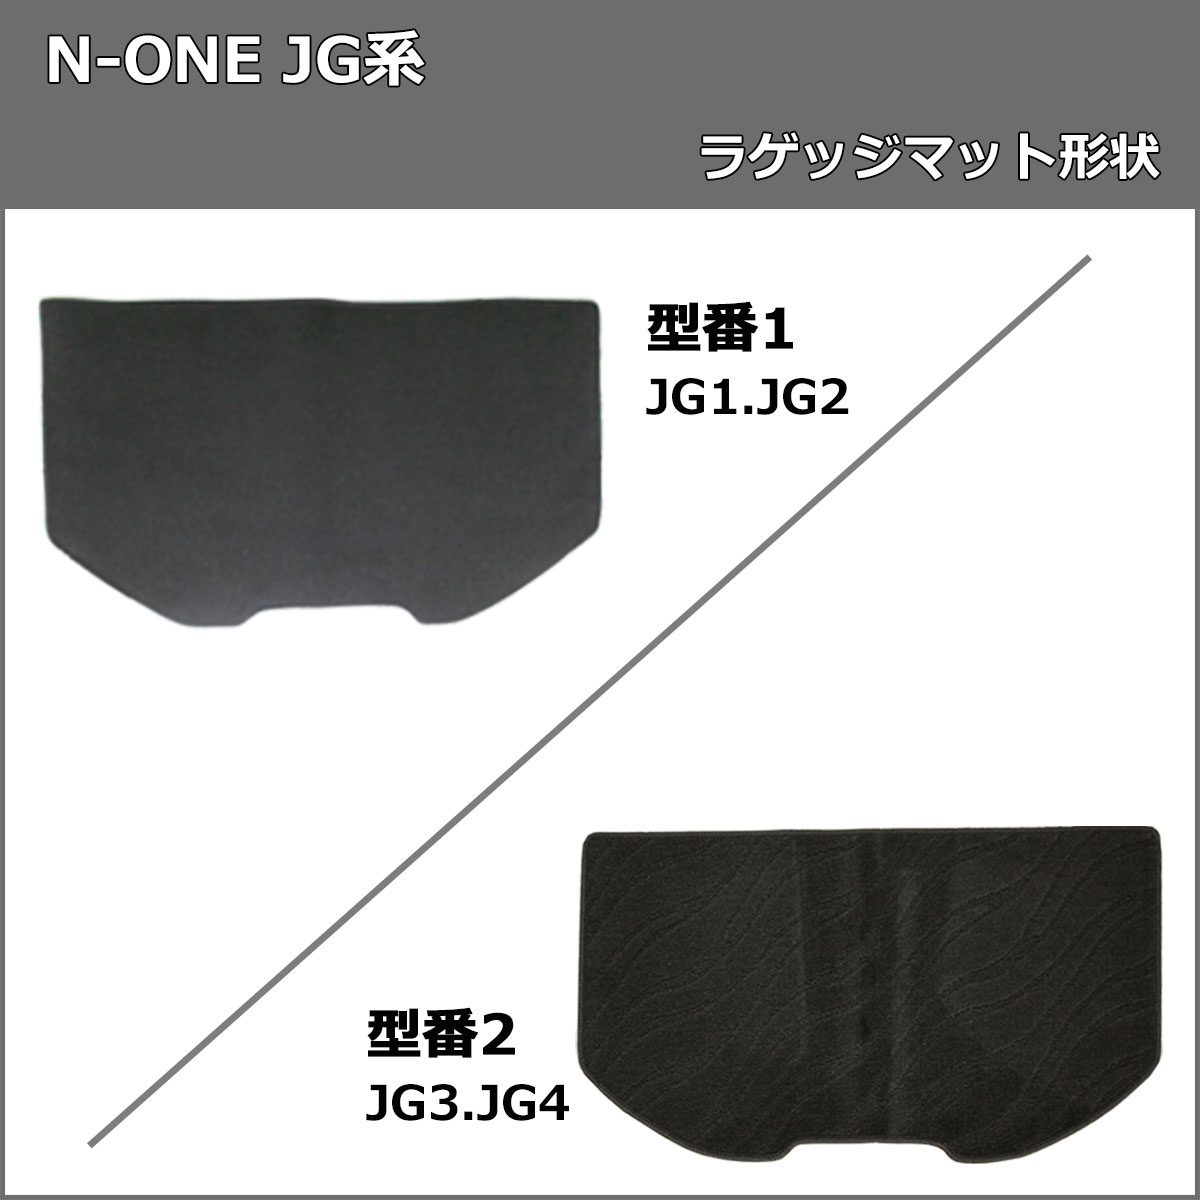 N-ONEJG系ラゲッジマット形状比較